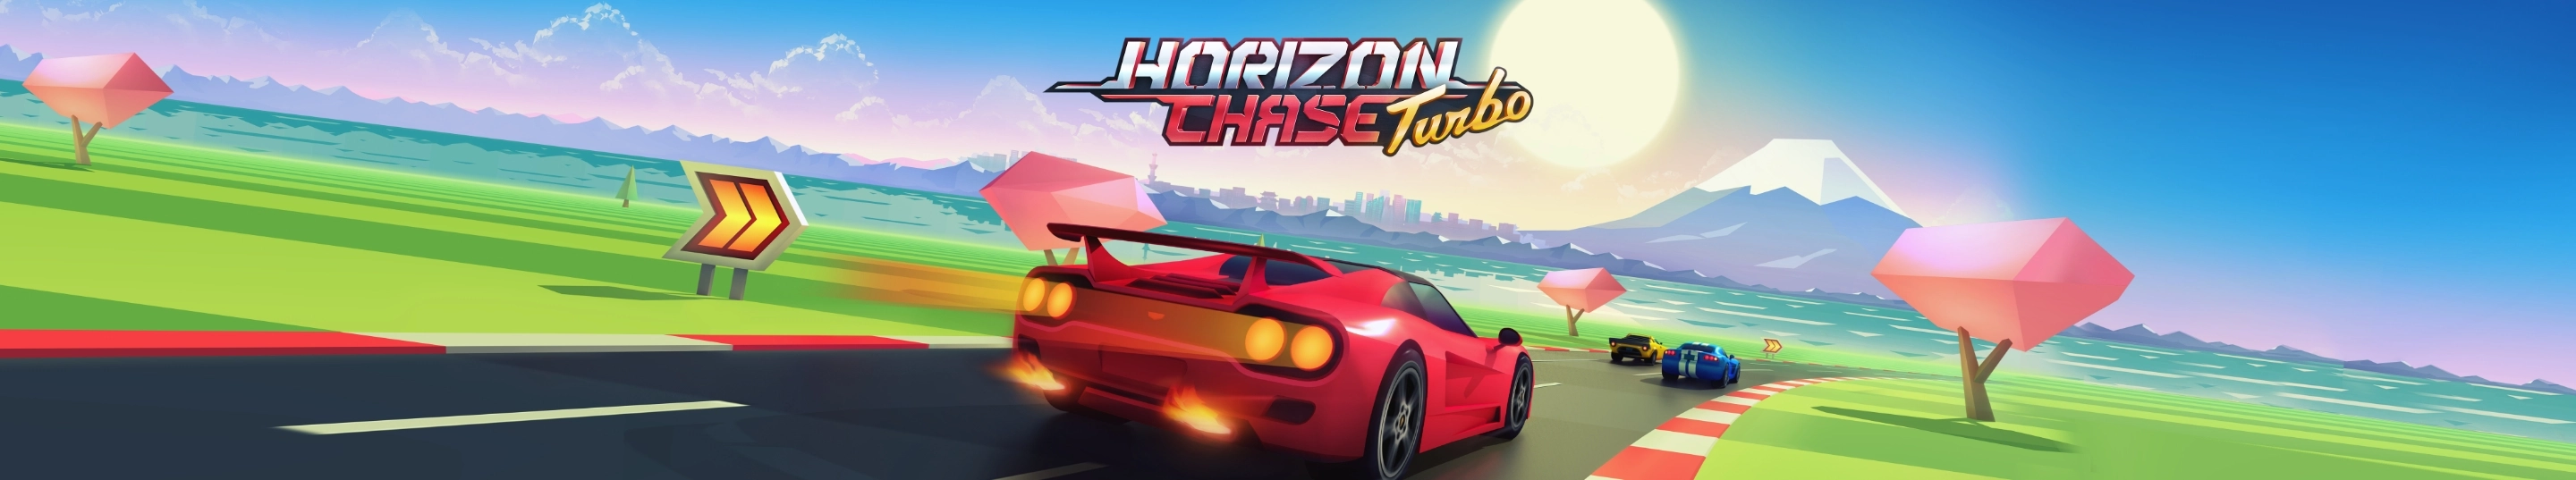 Banner image for Horizon Chase Turbo